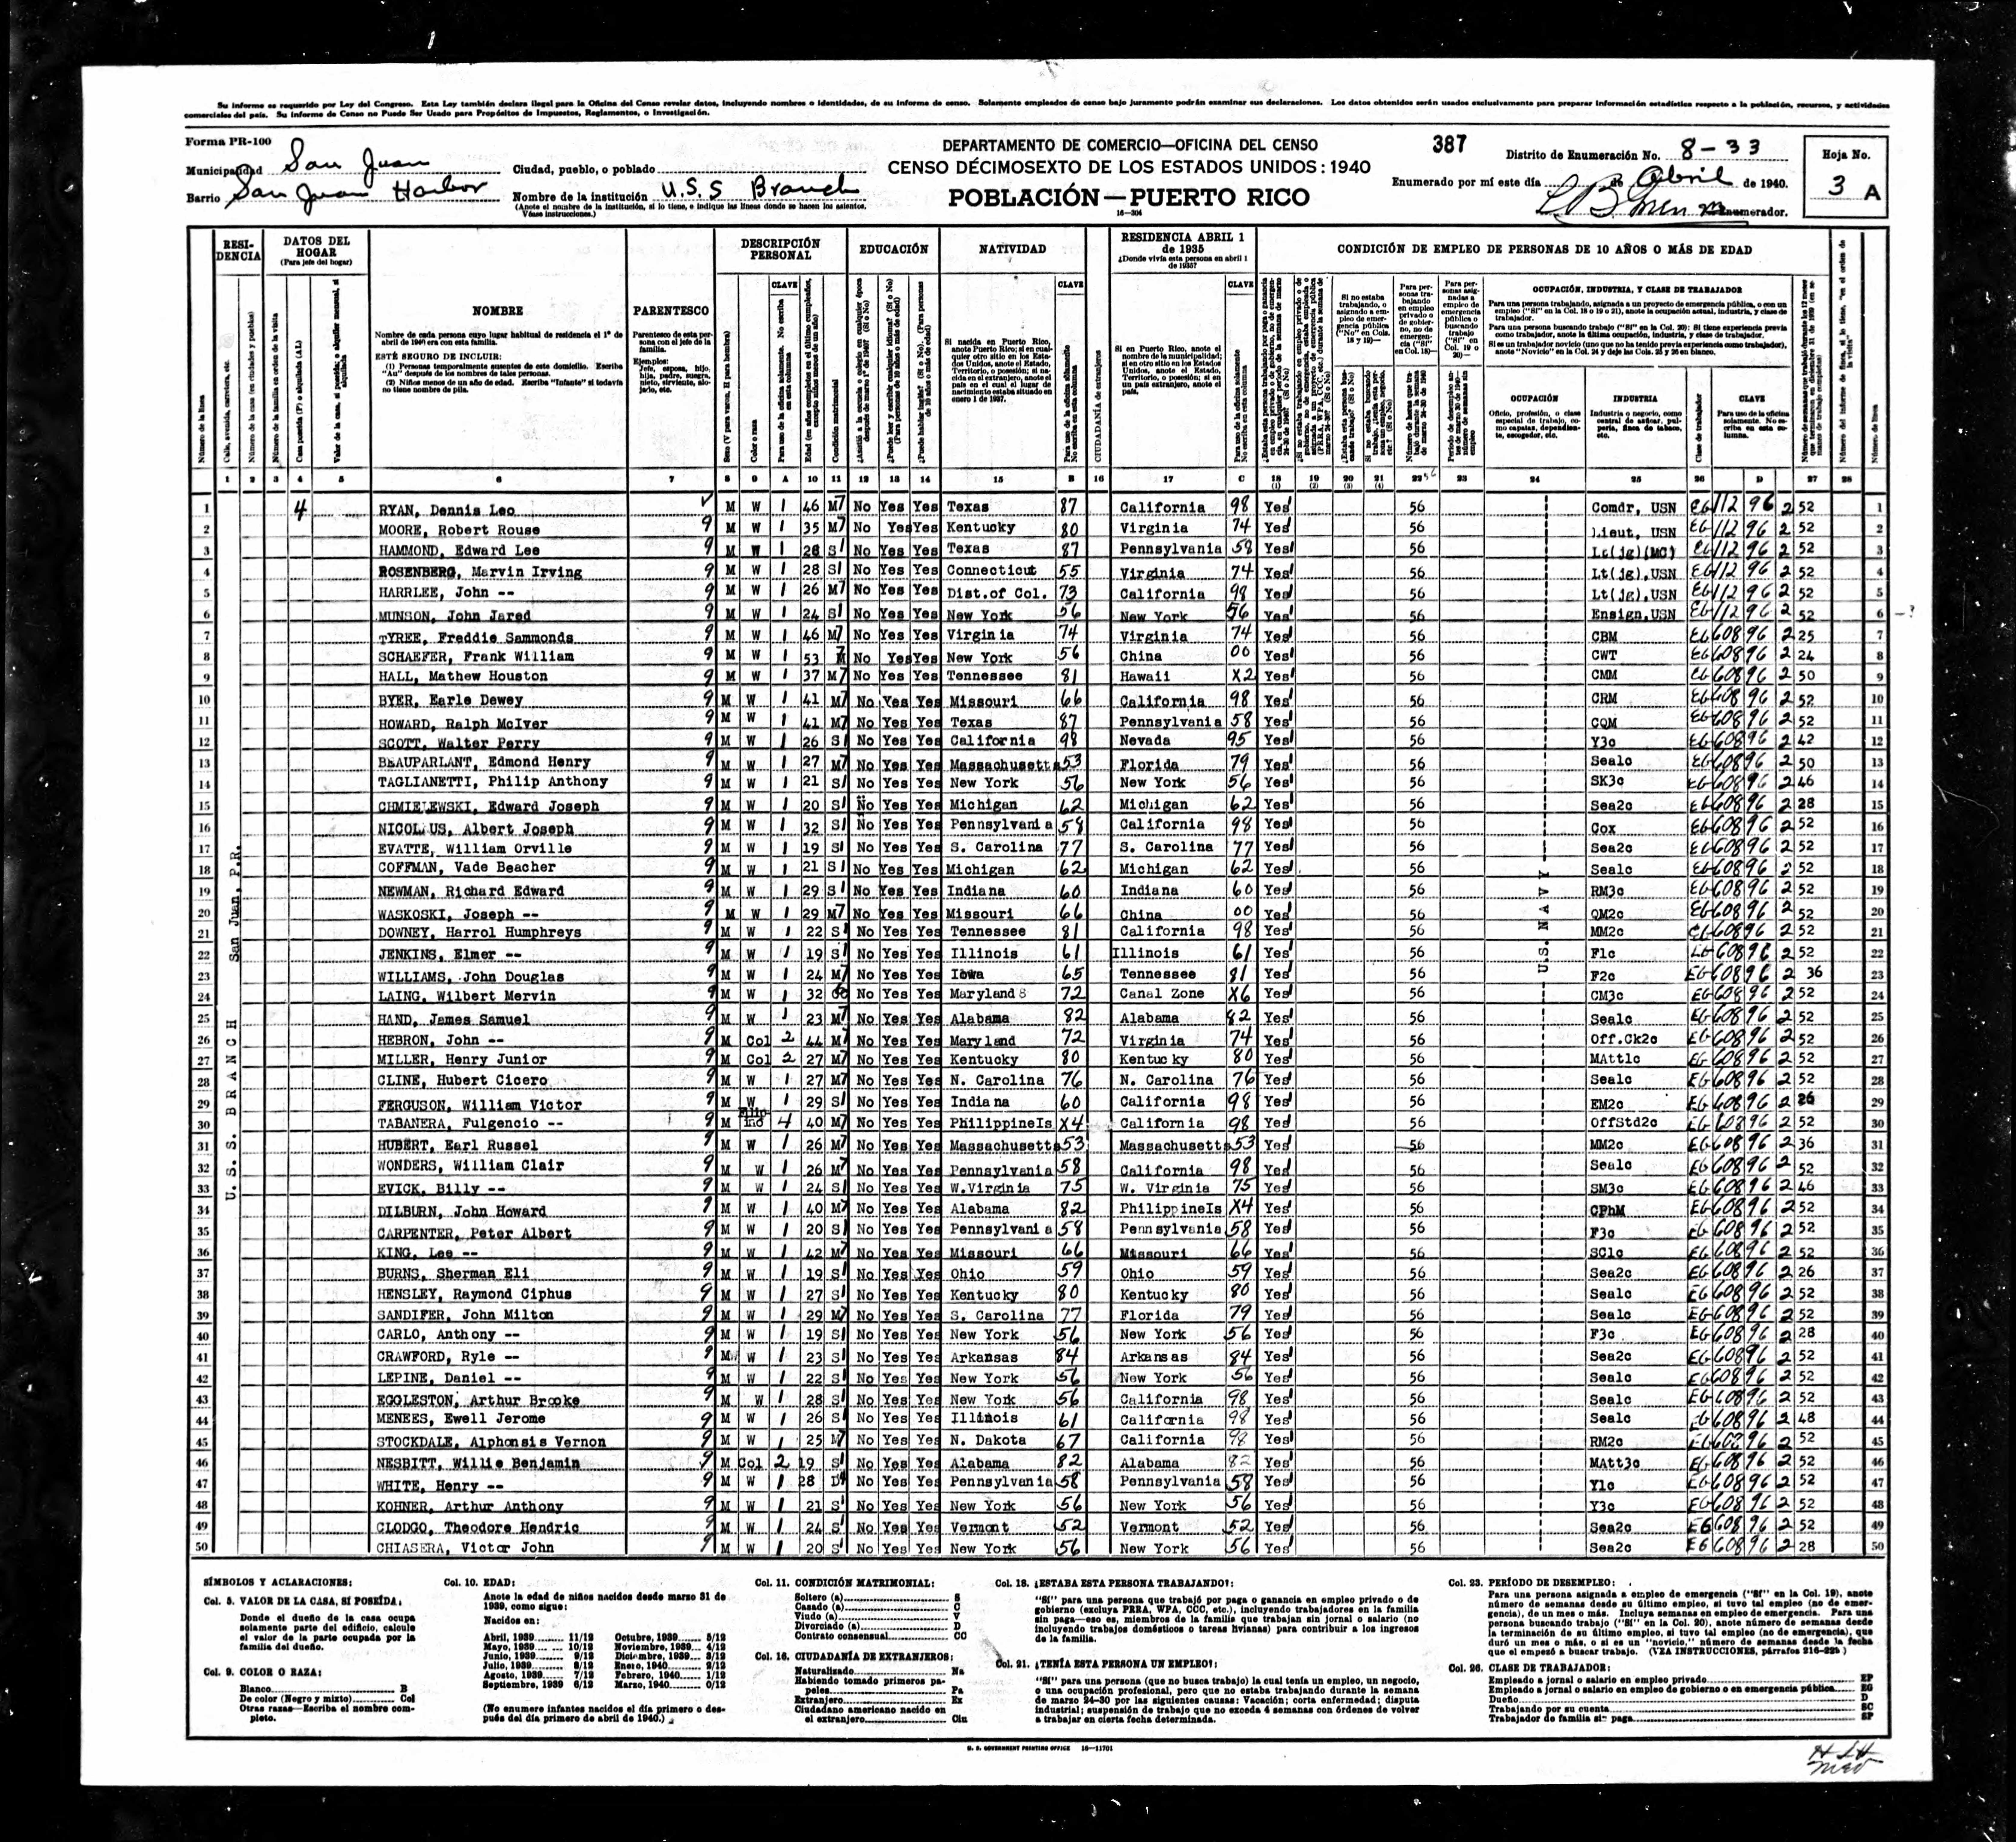 1940 US Census, John Jared Munson, line 6